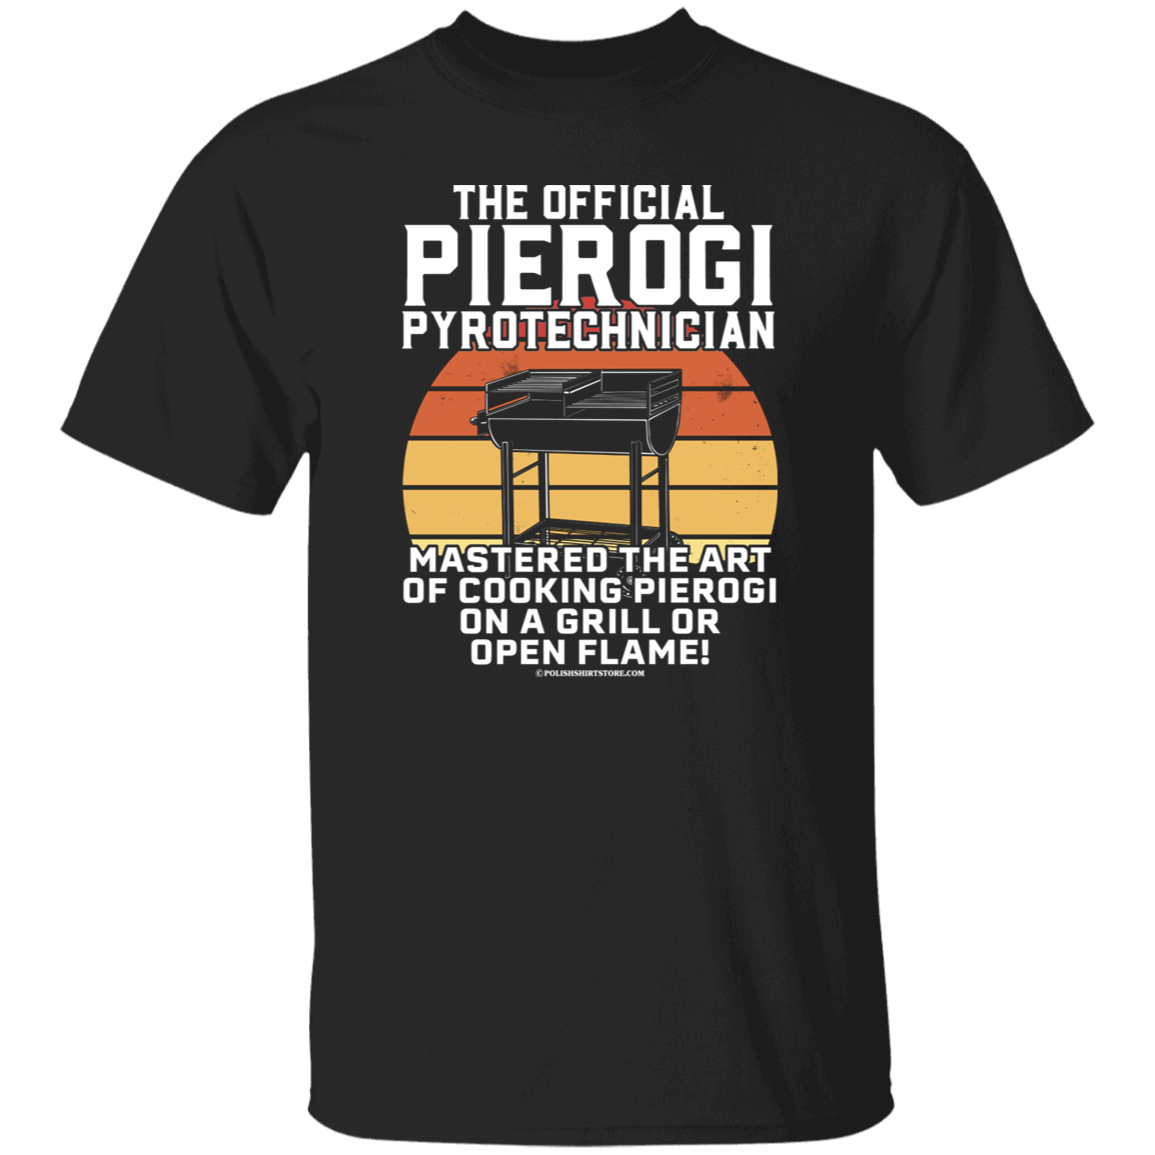 Pierogi Pyrotechnician T-Shirt Apparel CustomCat G500 5.3 oz. T-Shirt Black S